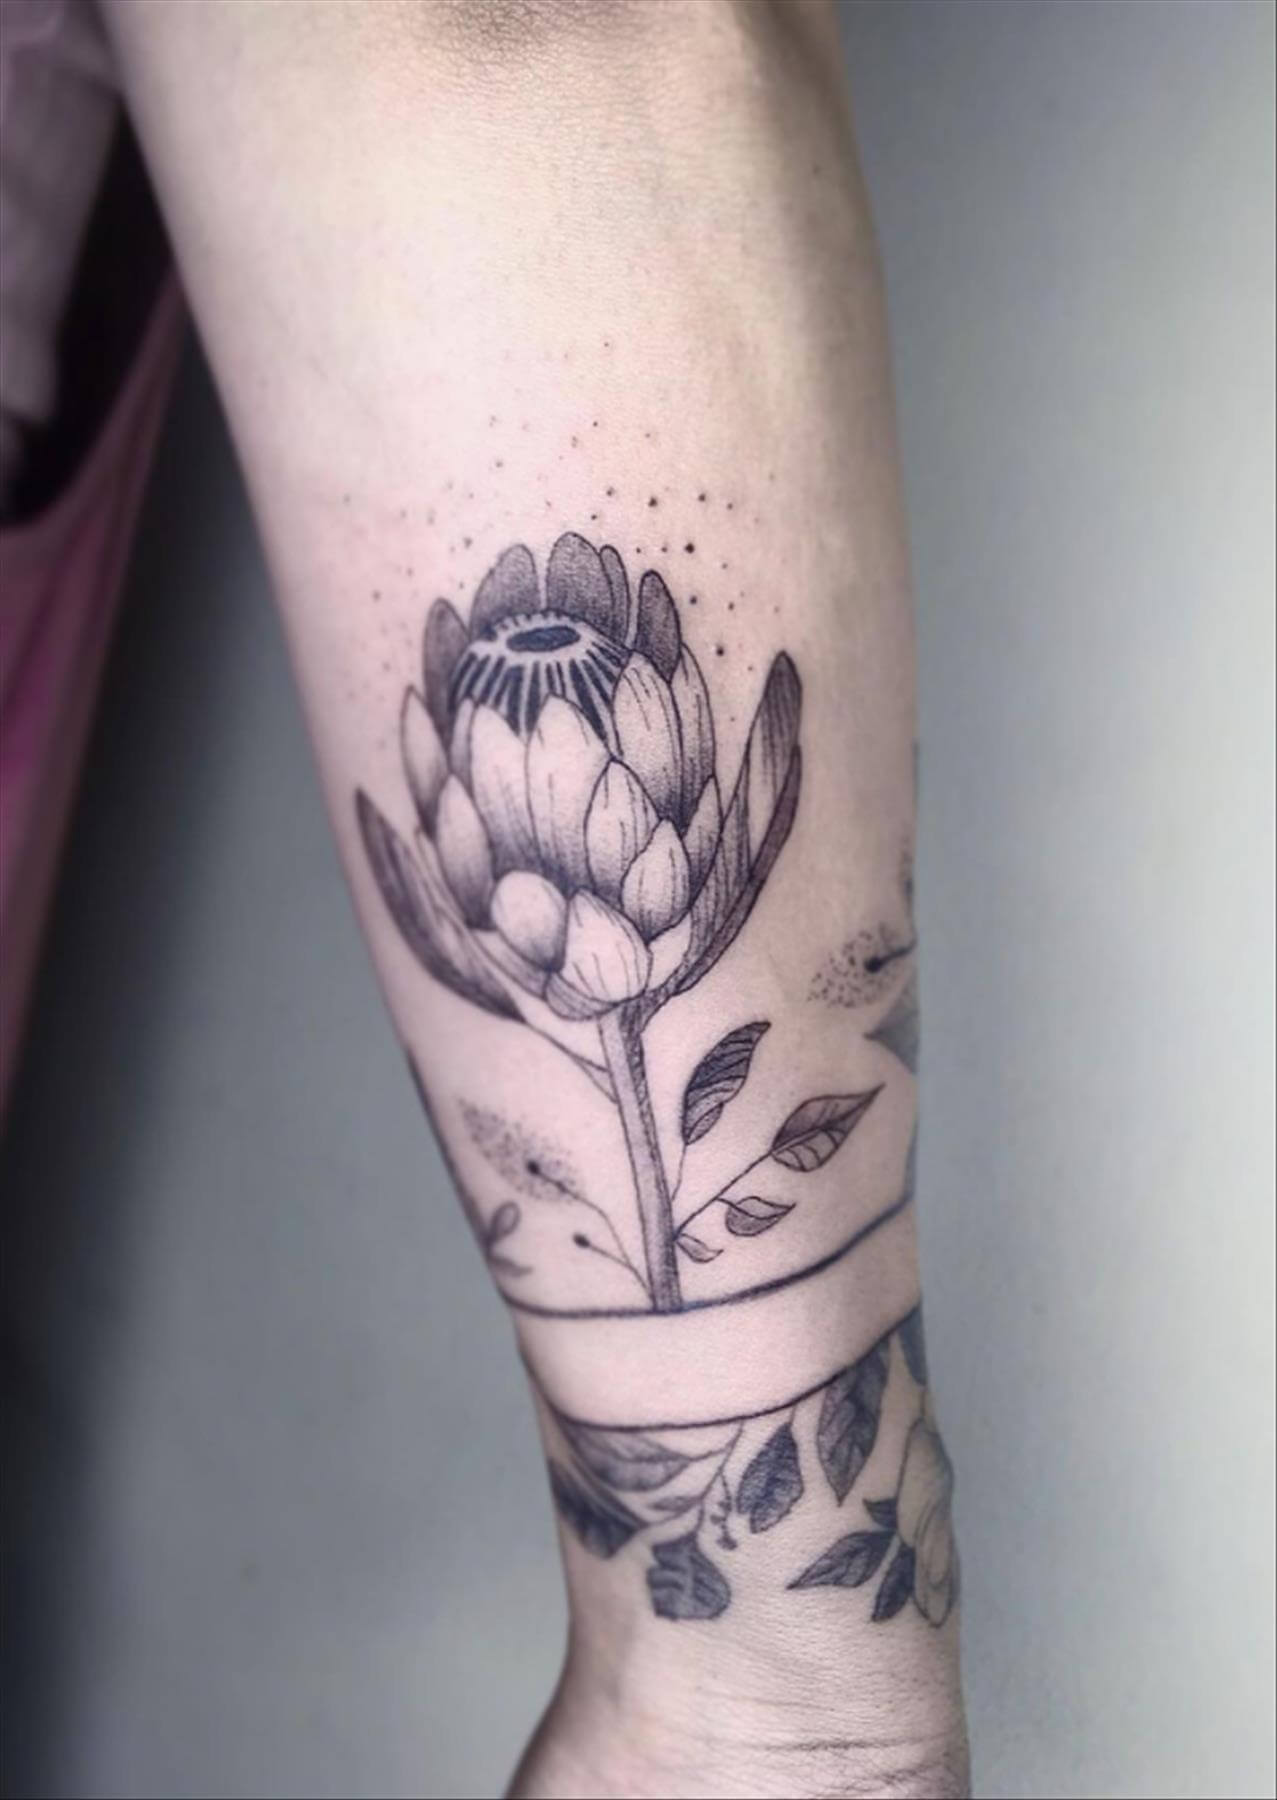 Artichoke Flower Tattoo 10 Artichoke Tattoo: Everything You Need To Know (30+ Cool Design Ideas)